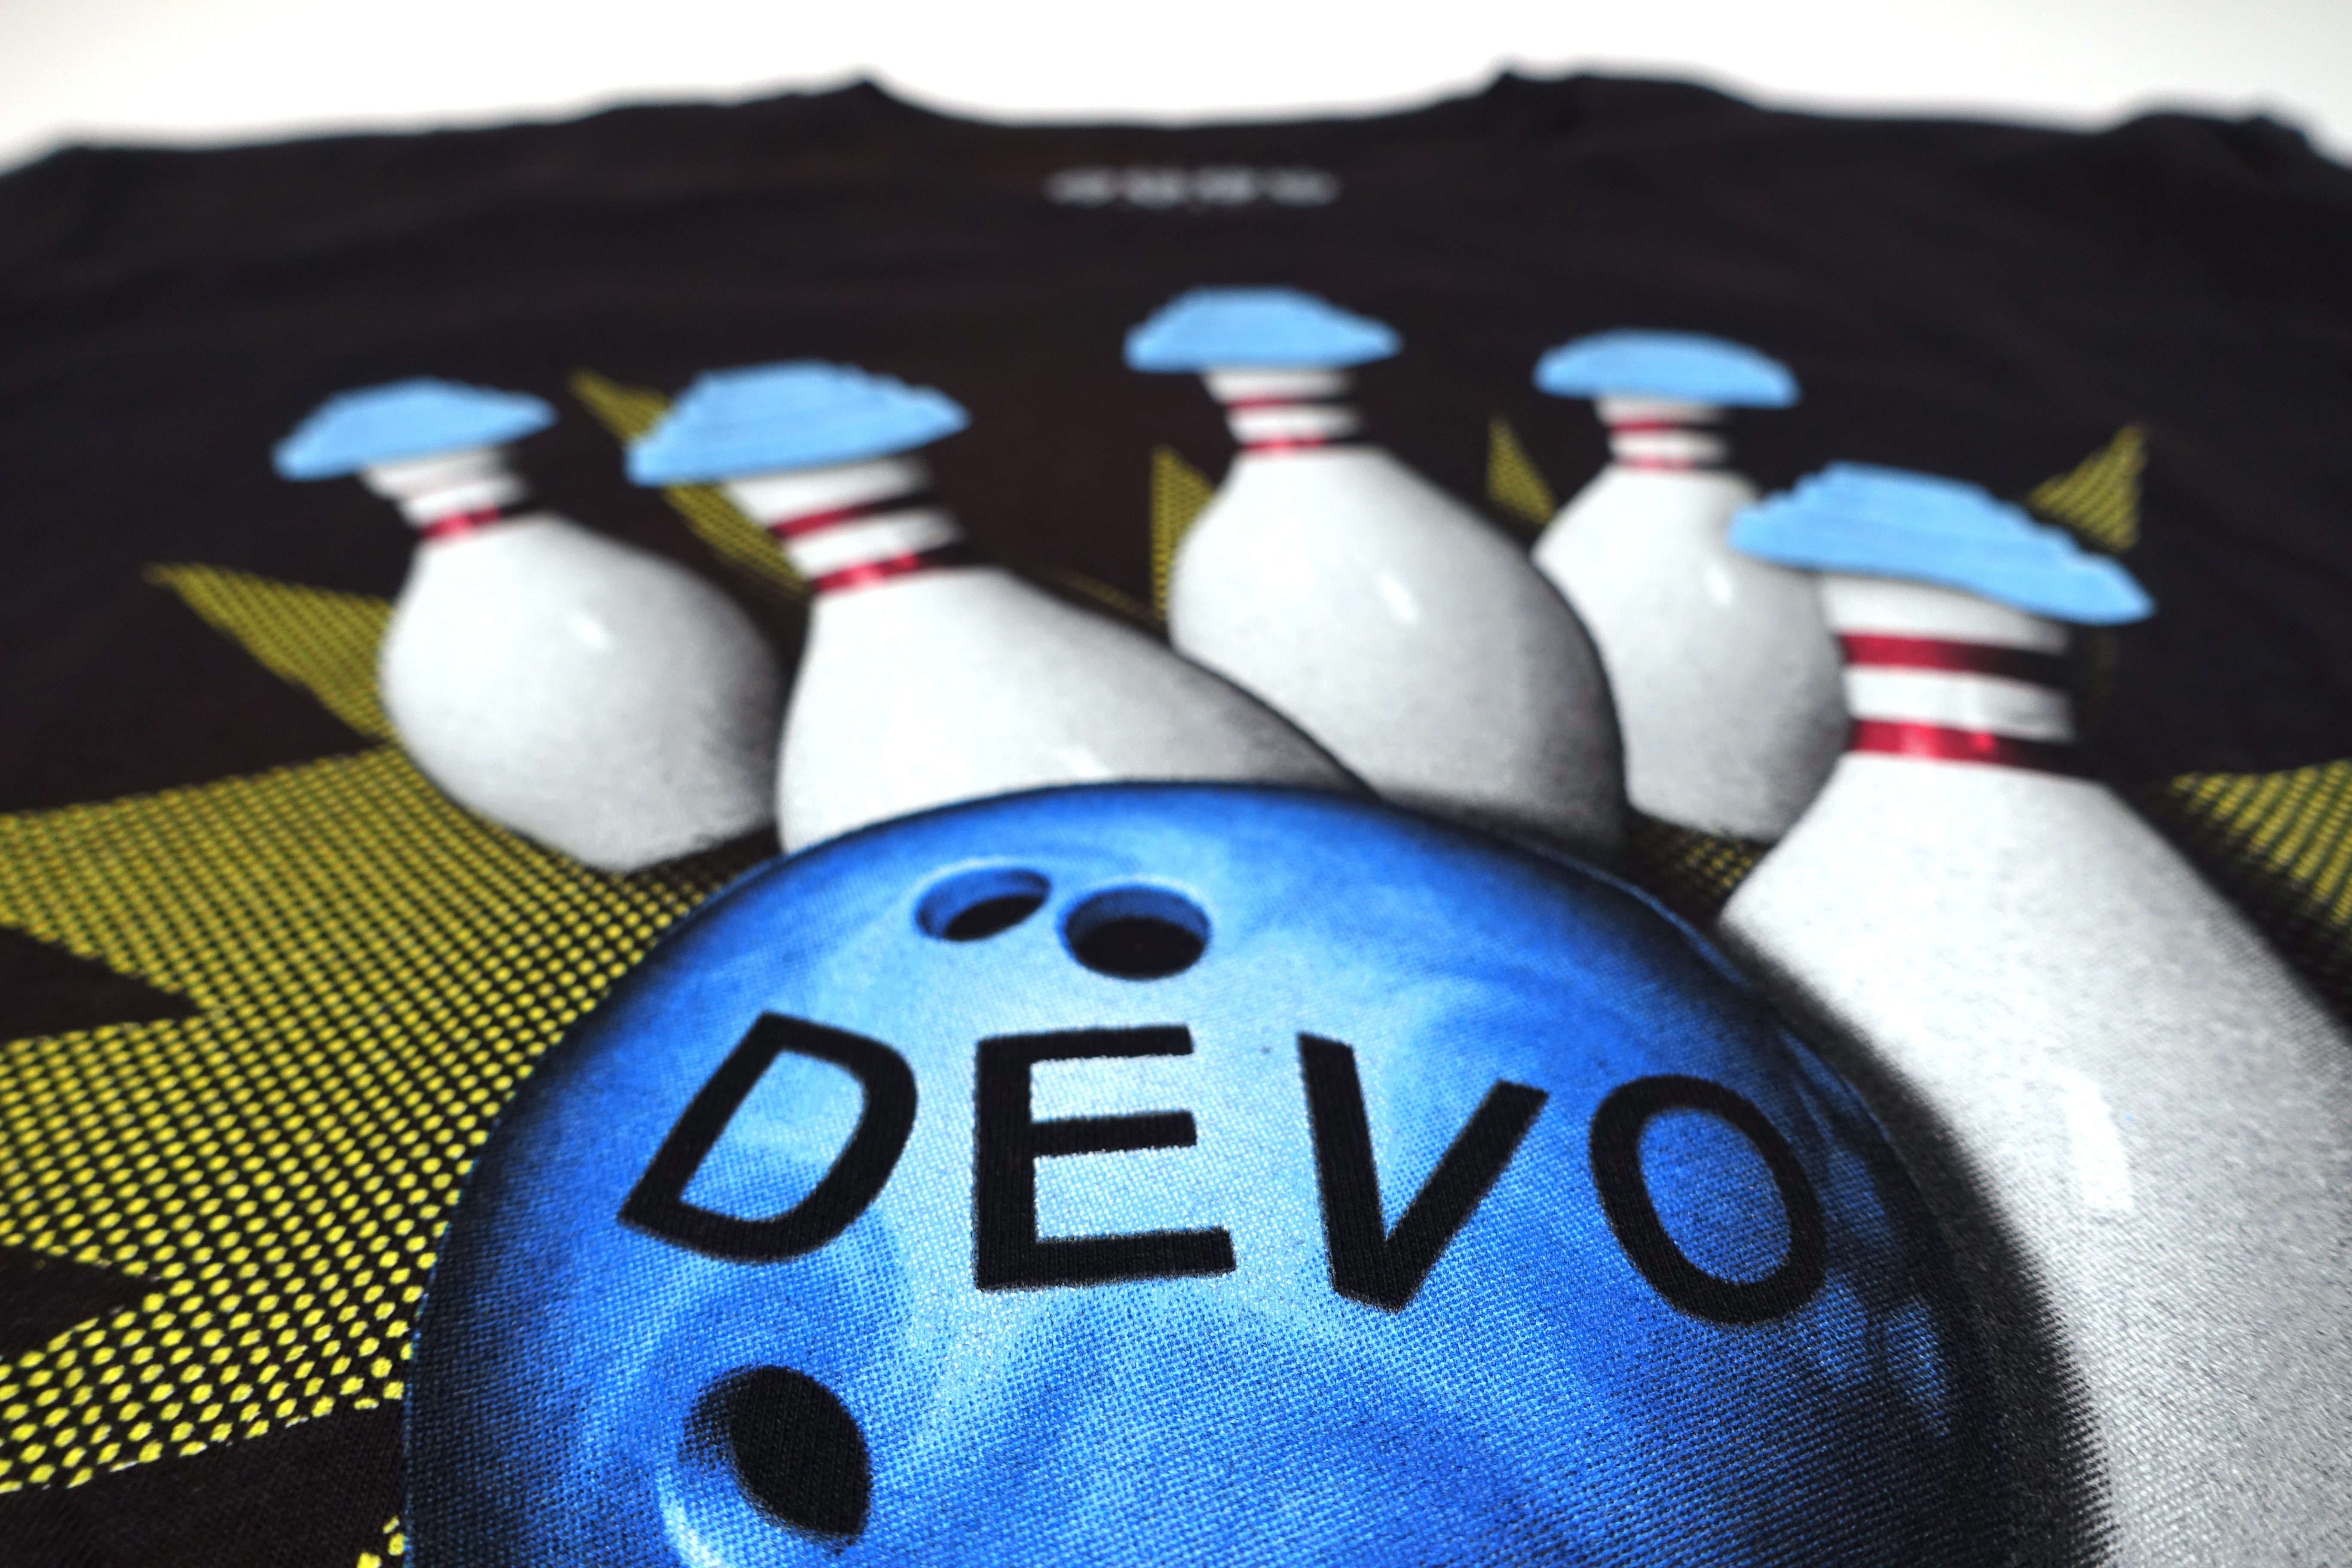 Devo – Punk Rock Bowling May 2013 Tour Shirt Size Large